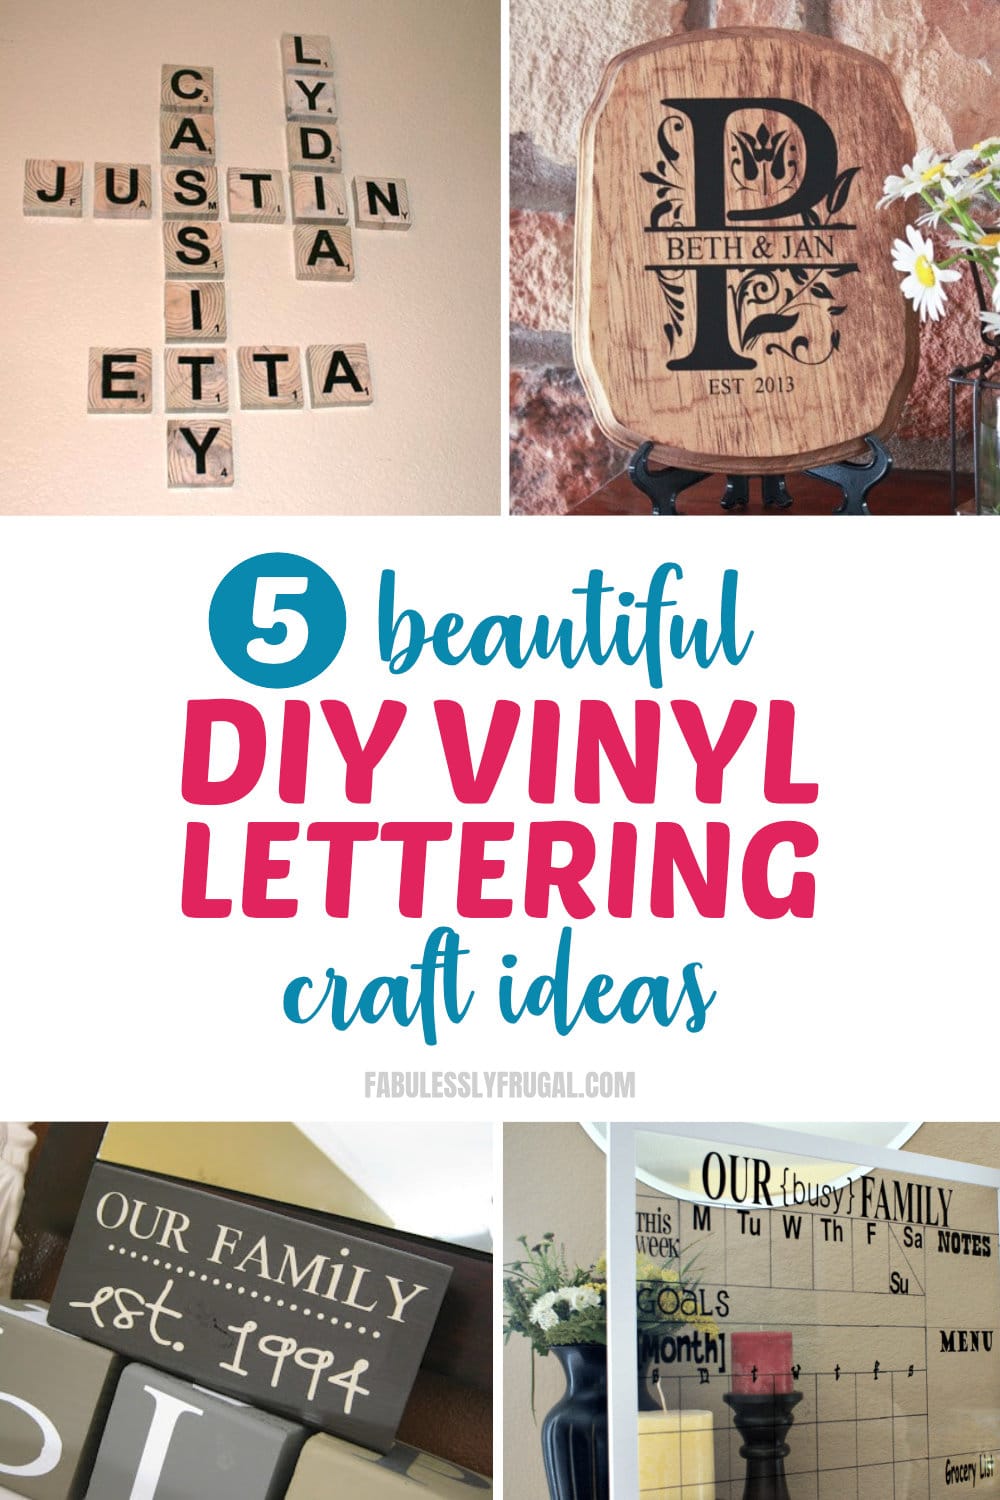 5 beautiful DIY vinyl lettering craft ideas